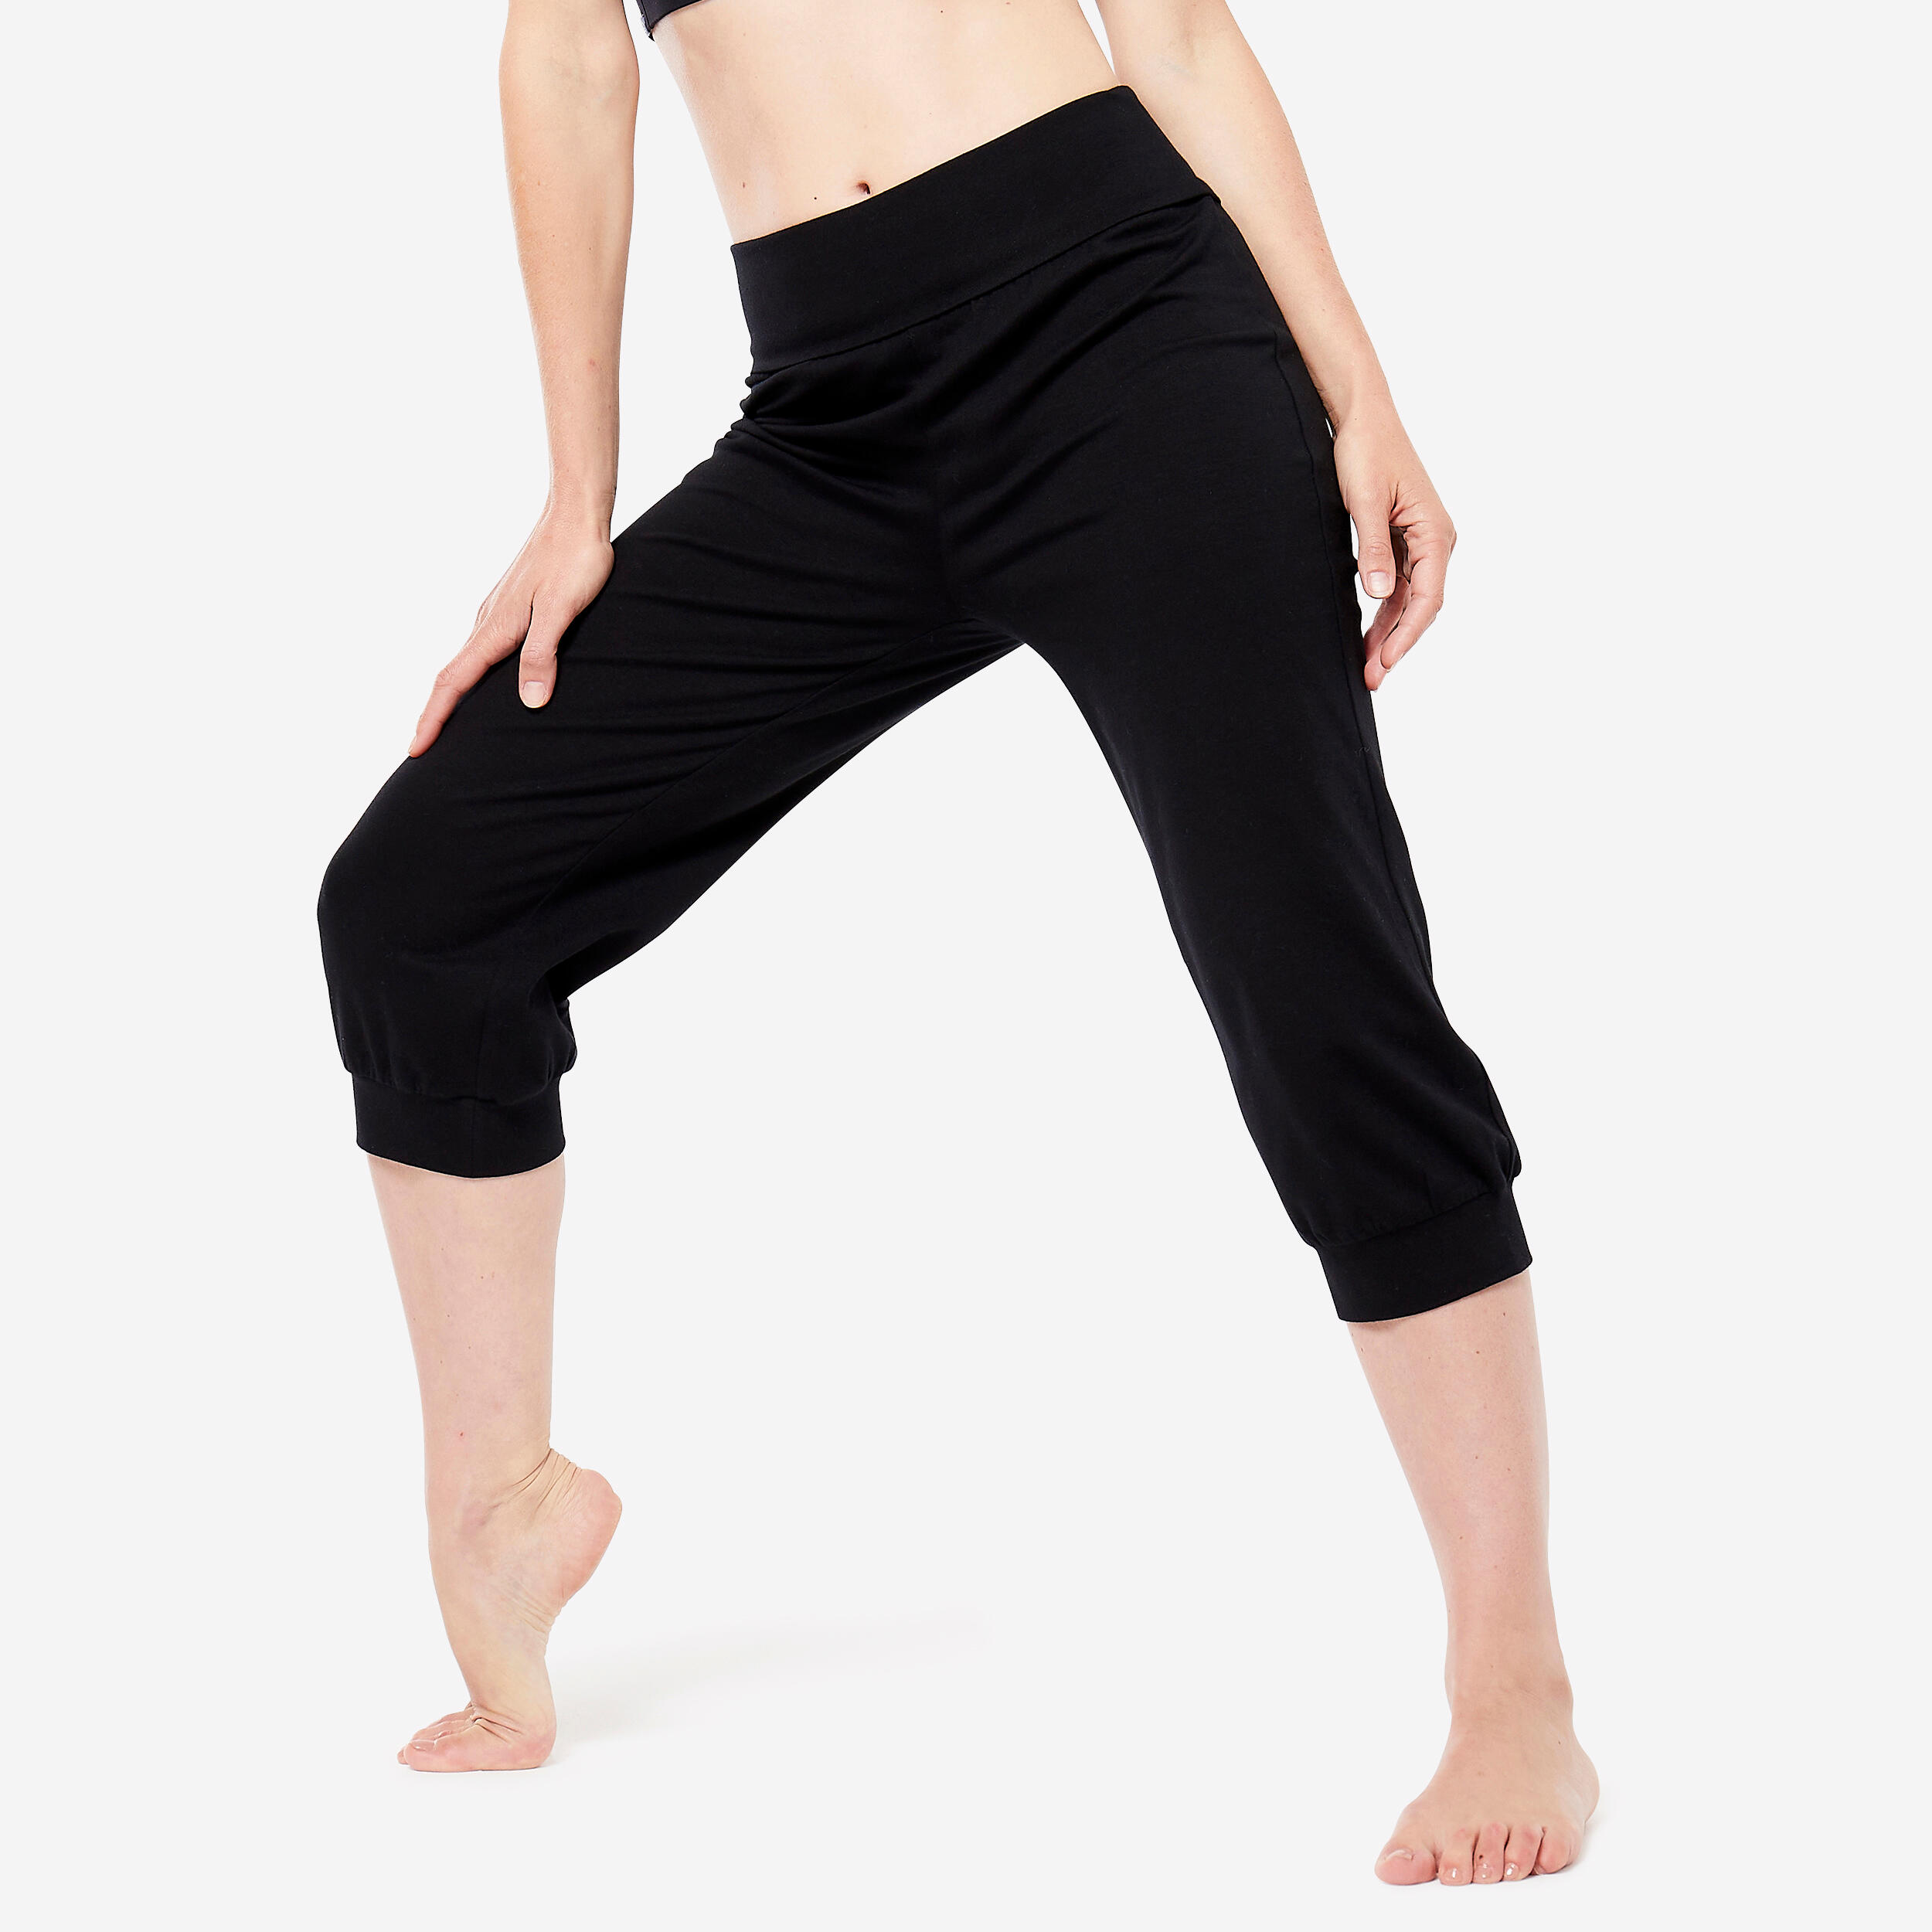  TRUBU Capri Yoga Pants with Pockets for Women - High